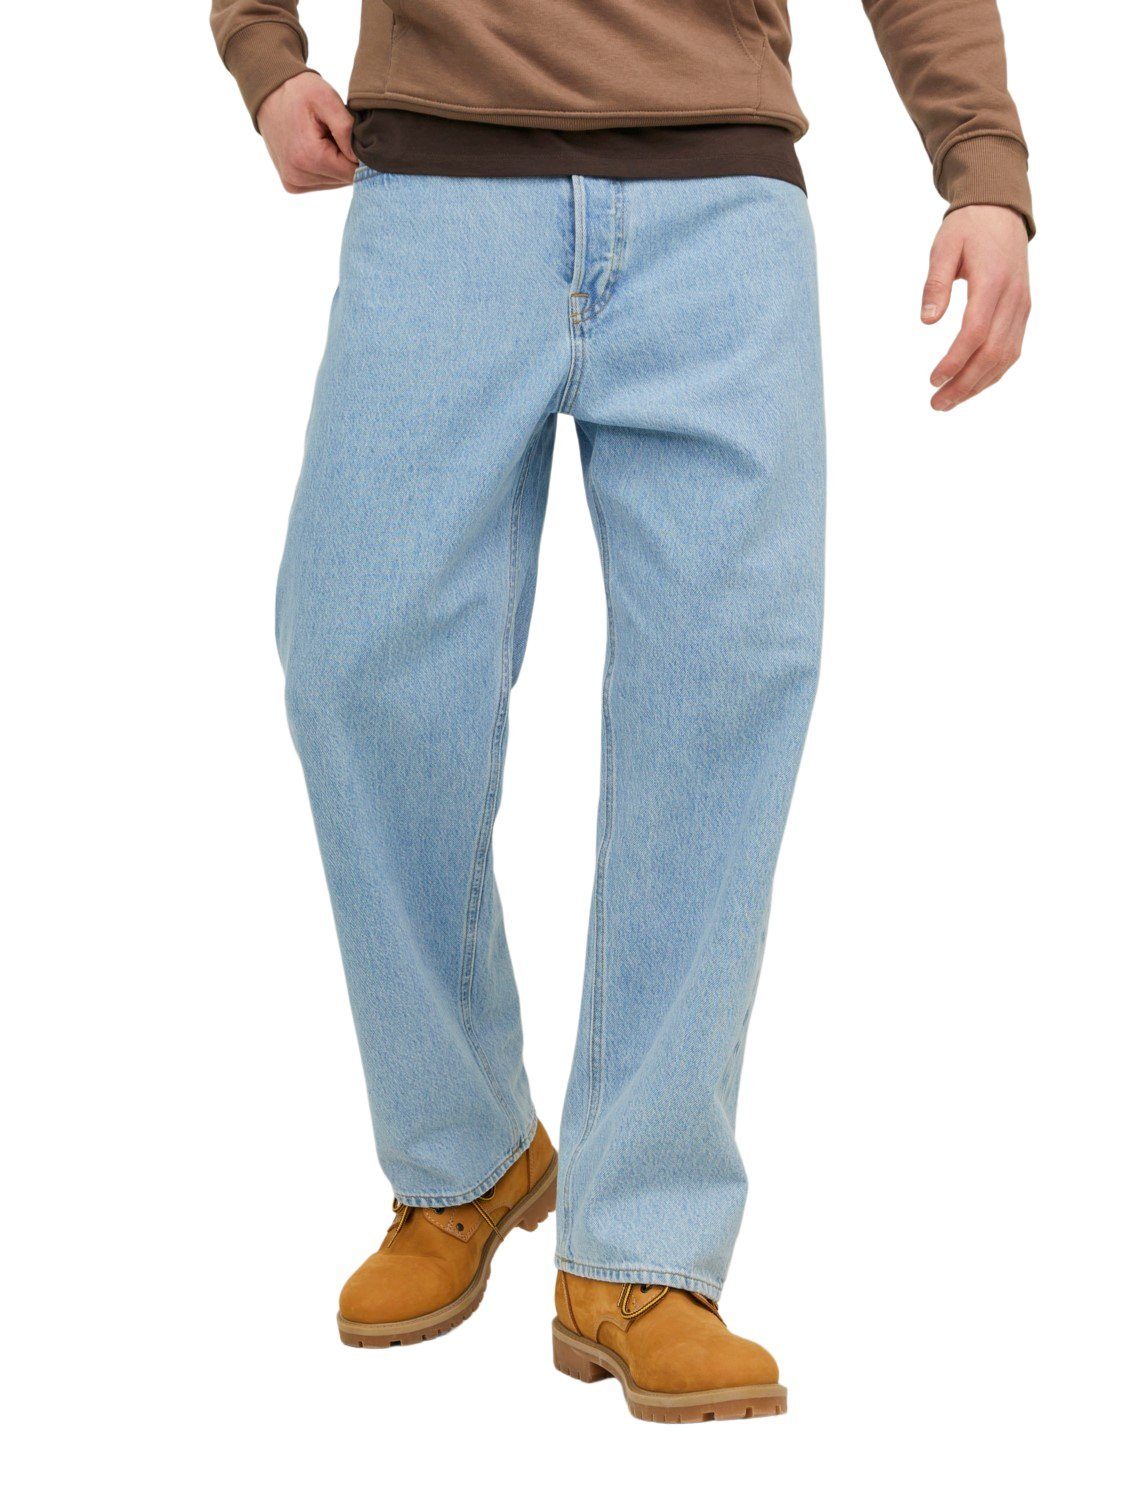 Jack & Jones Relax-fit-Jeans JJIALEX JJORIGINAL SBD 304 aus 100% Baumwolle